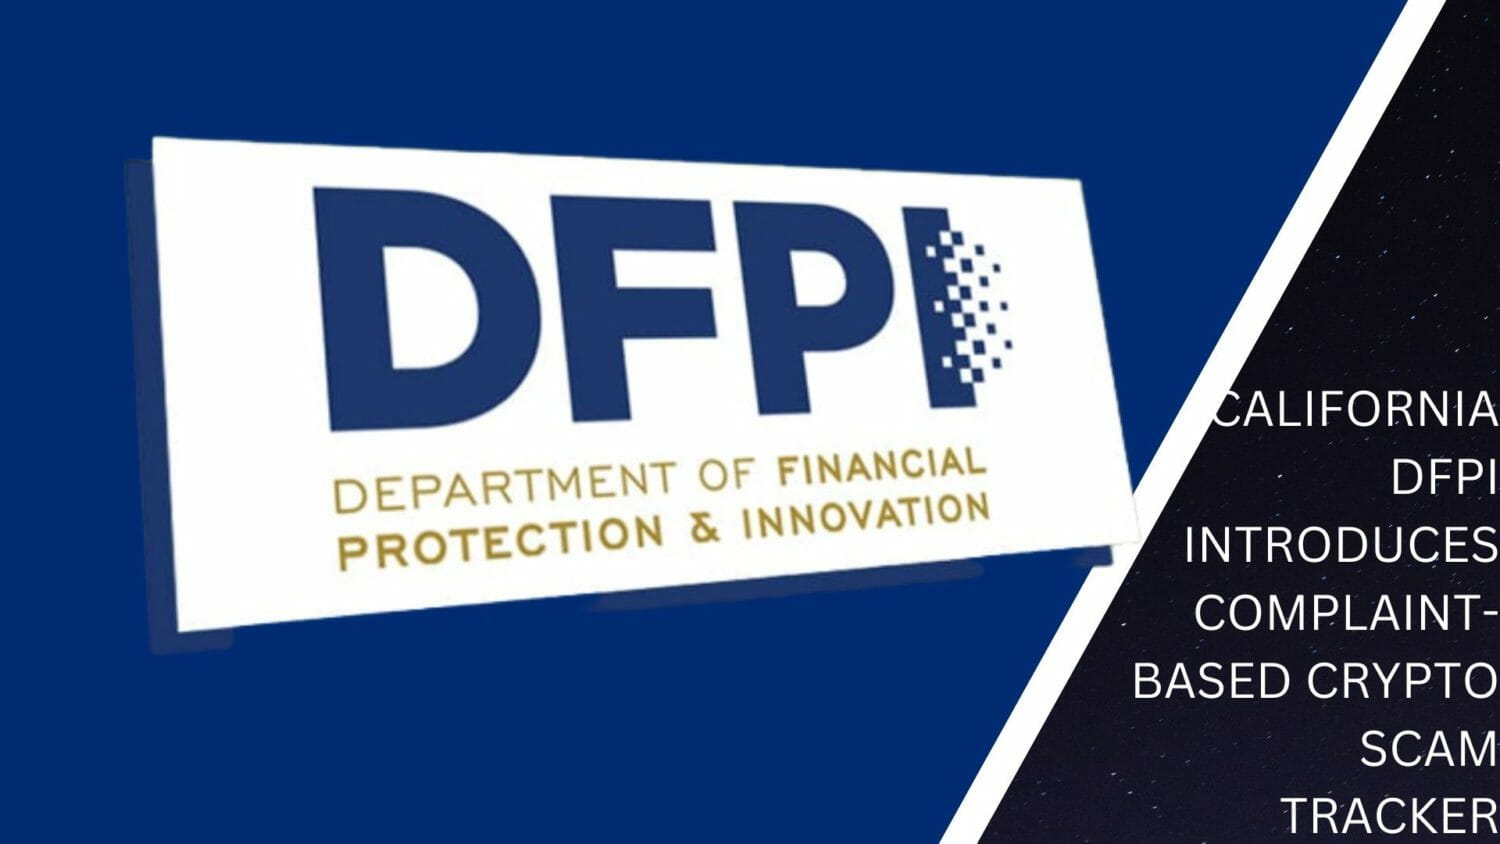 California Dfpi Introduces Complaint-Based Crypto Scam Tracker